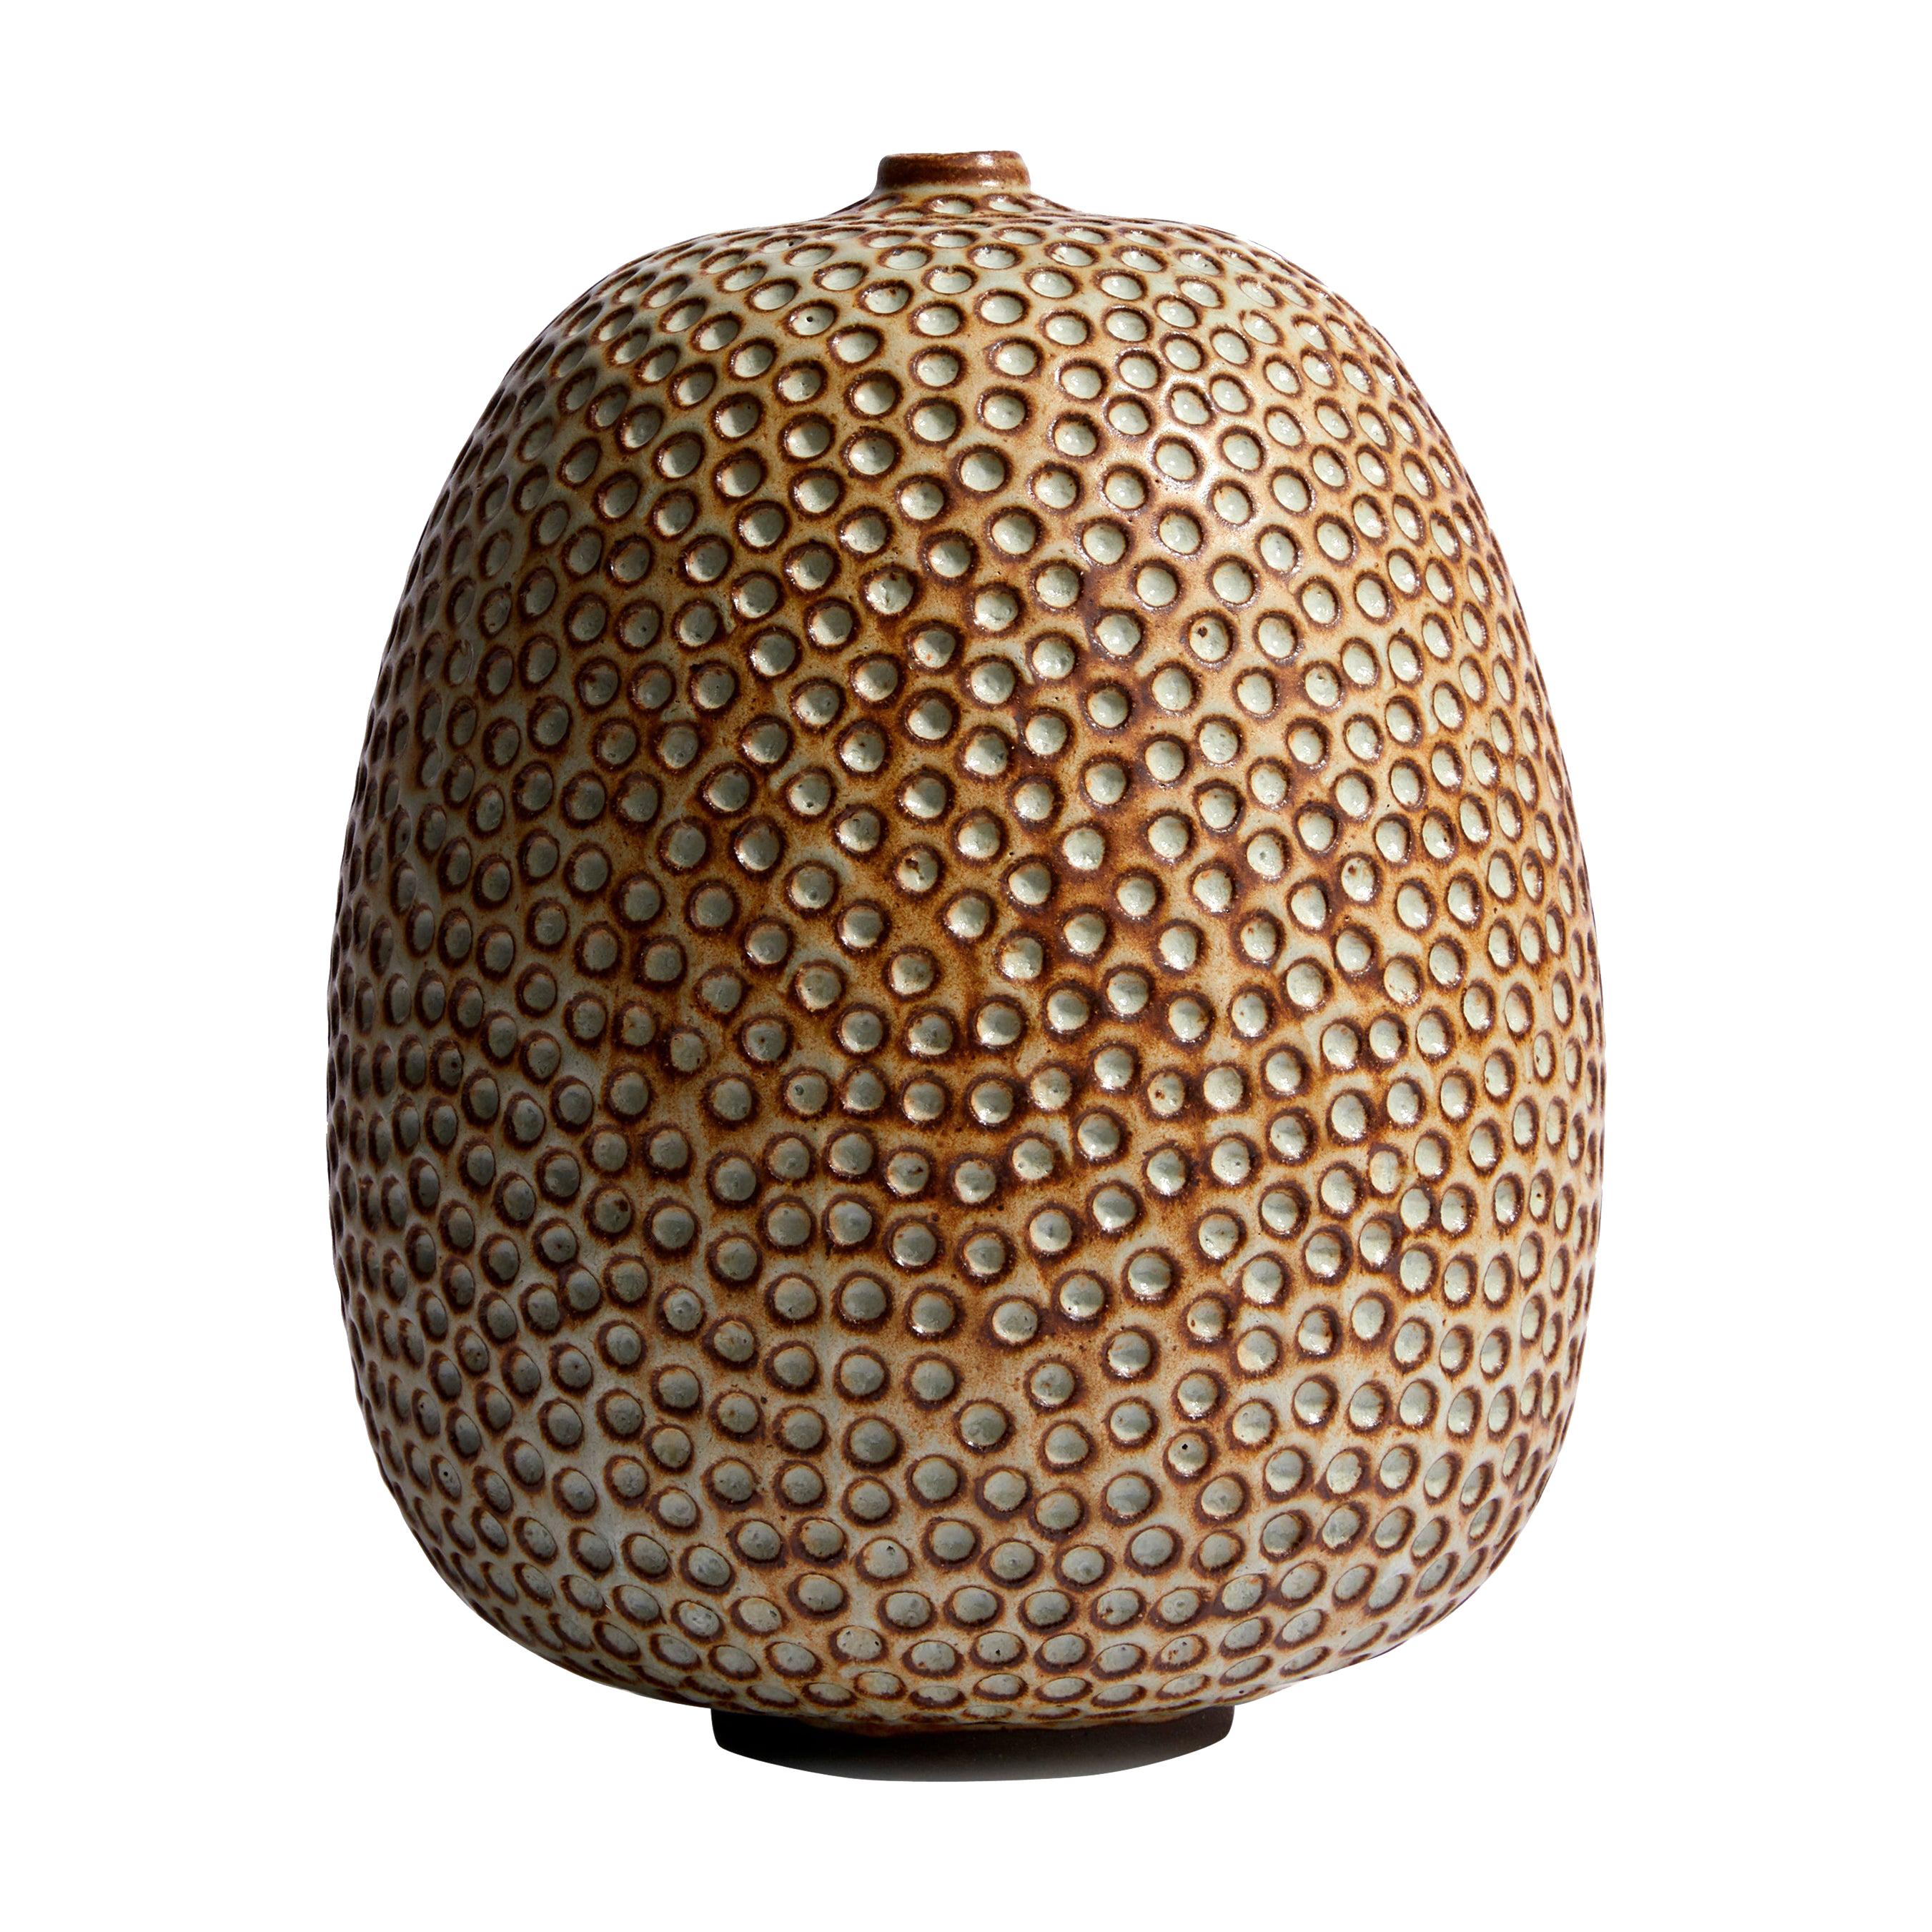 Handmade Midcentury Style Ceramic Vase / Interior Sculpture / Wabi Sabi Vessel